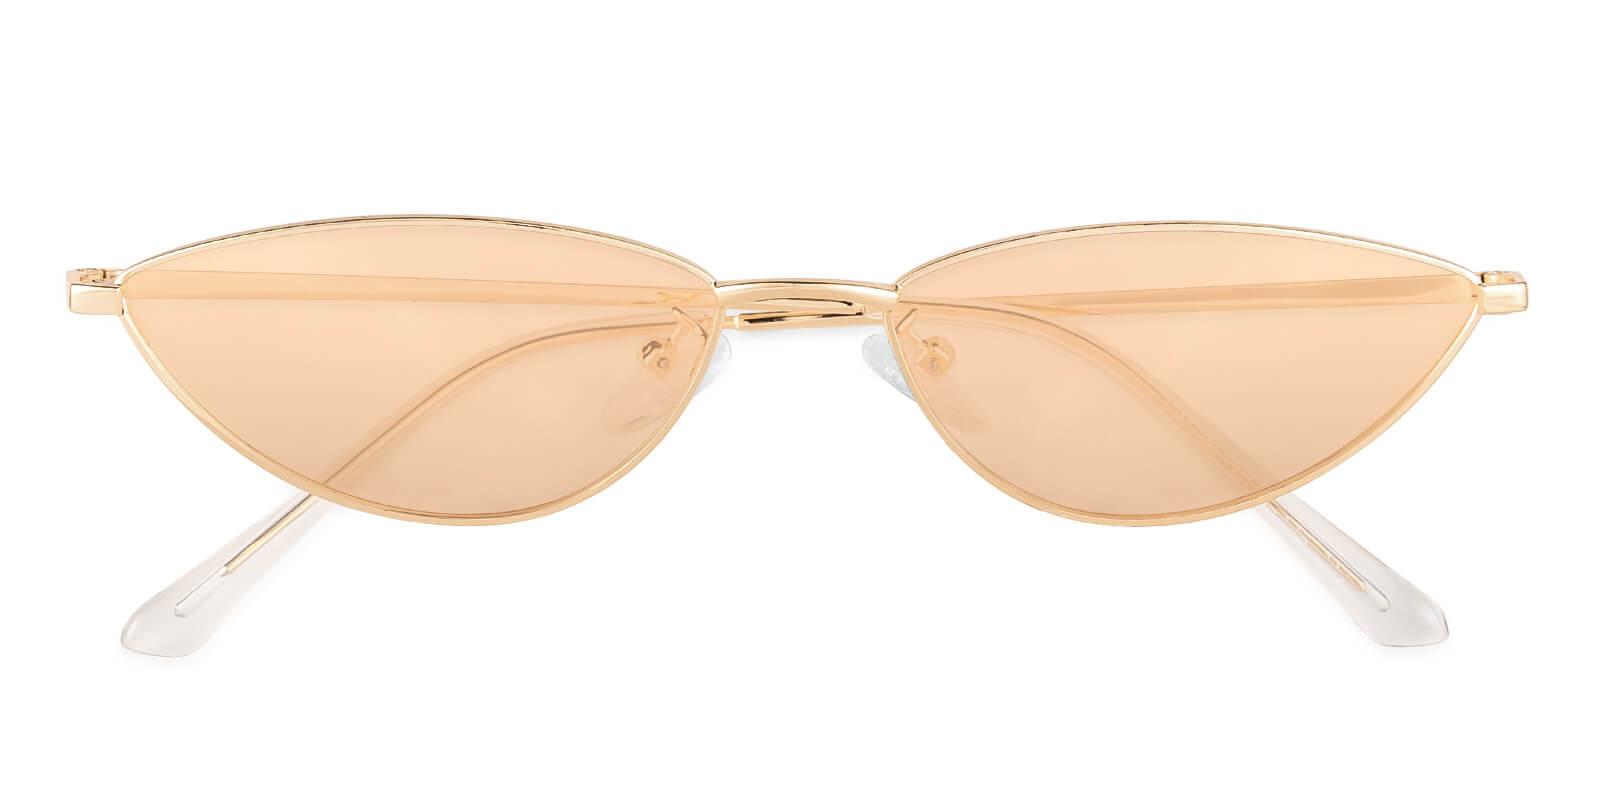 Echo Gold Metal Lightweight , NosePads , Sunglasses Frames from ABBE Glasses